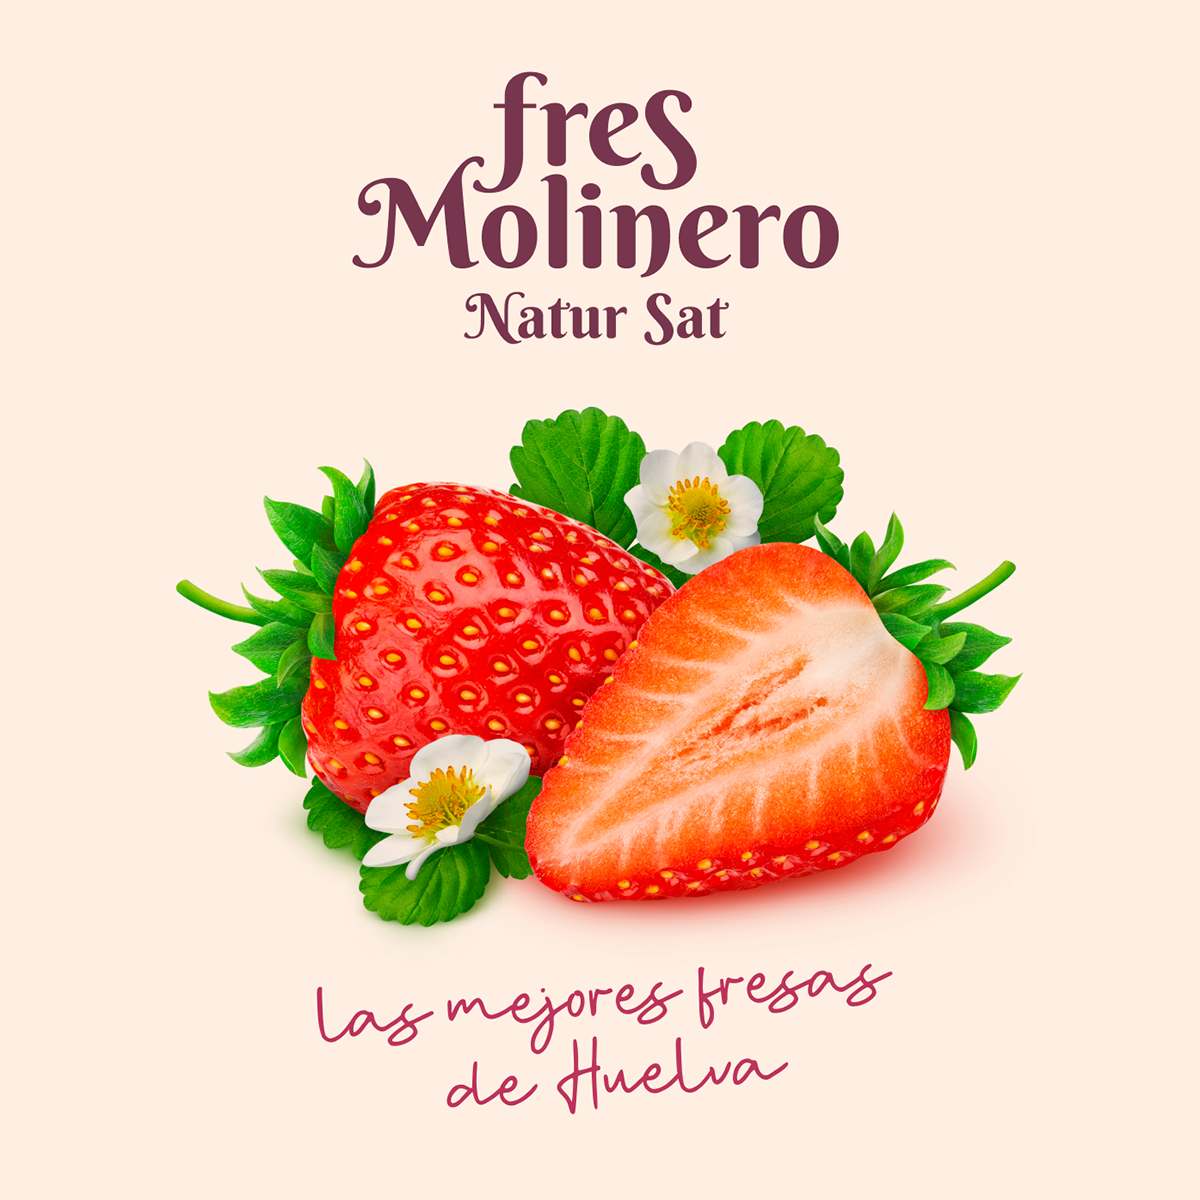 branding  logo strawberries